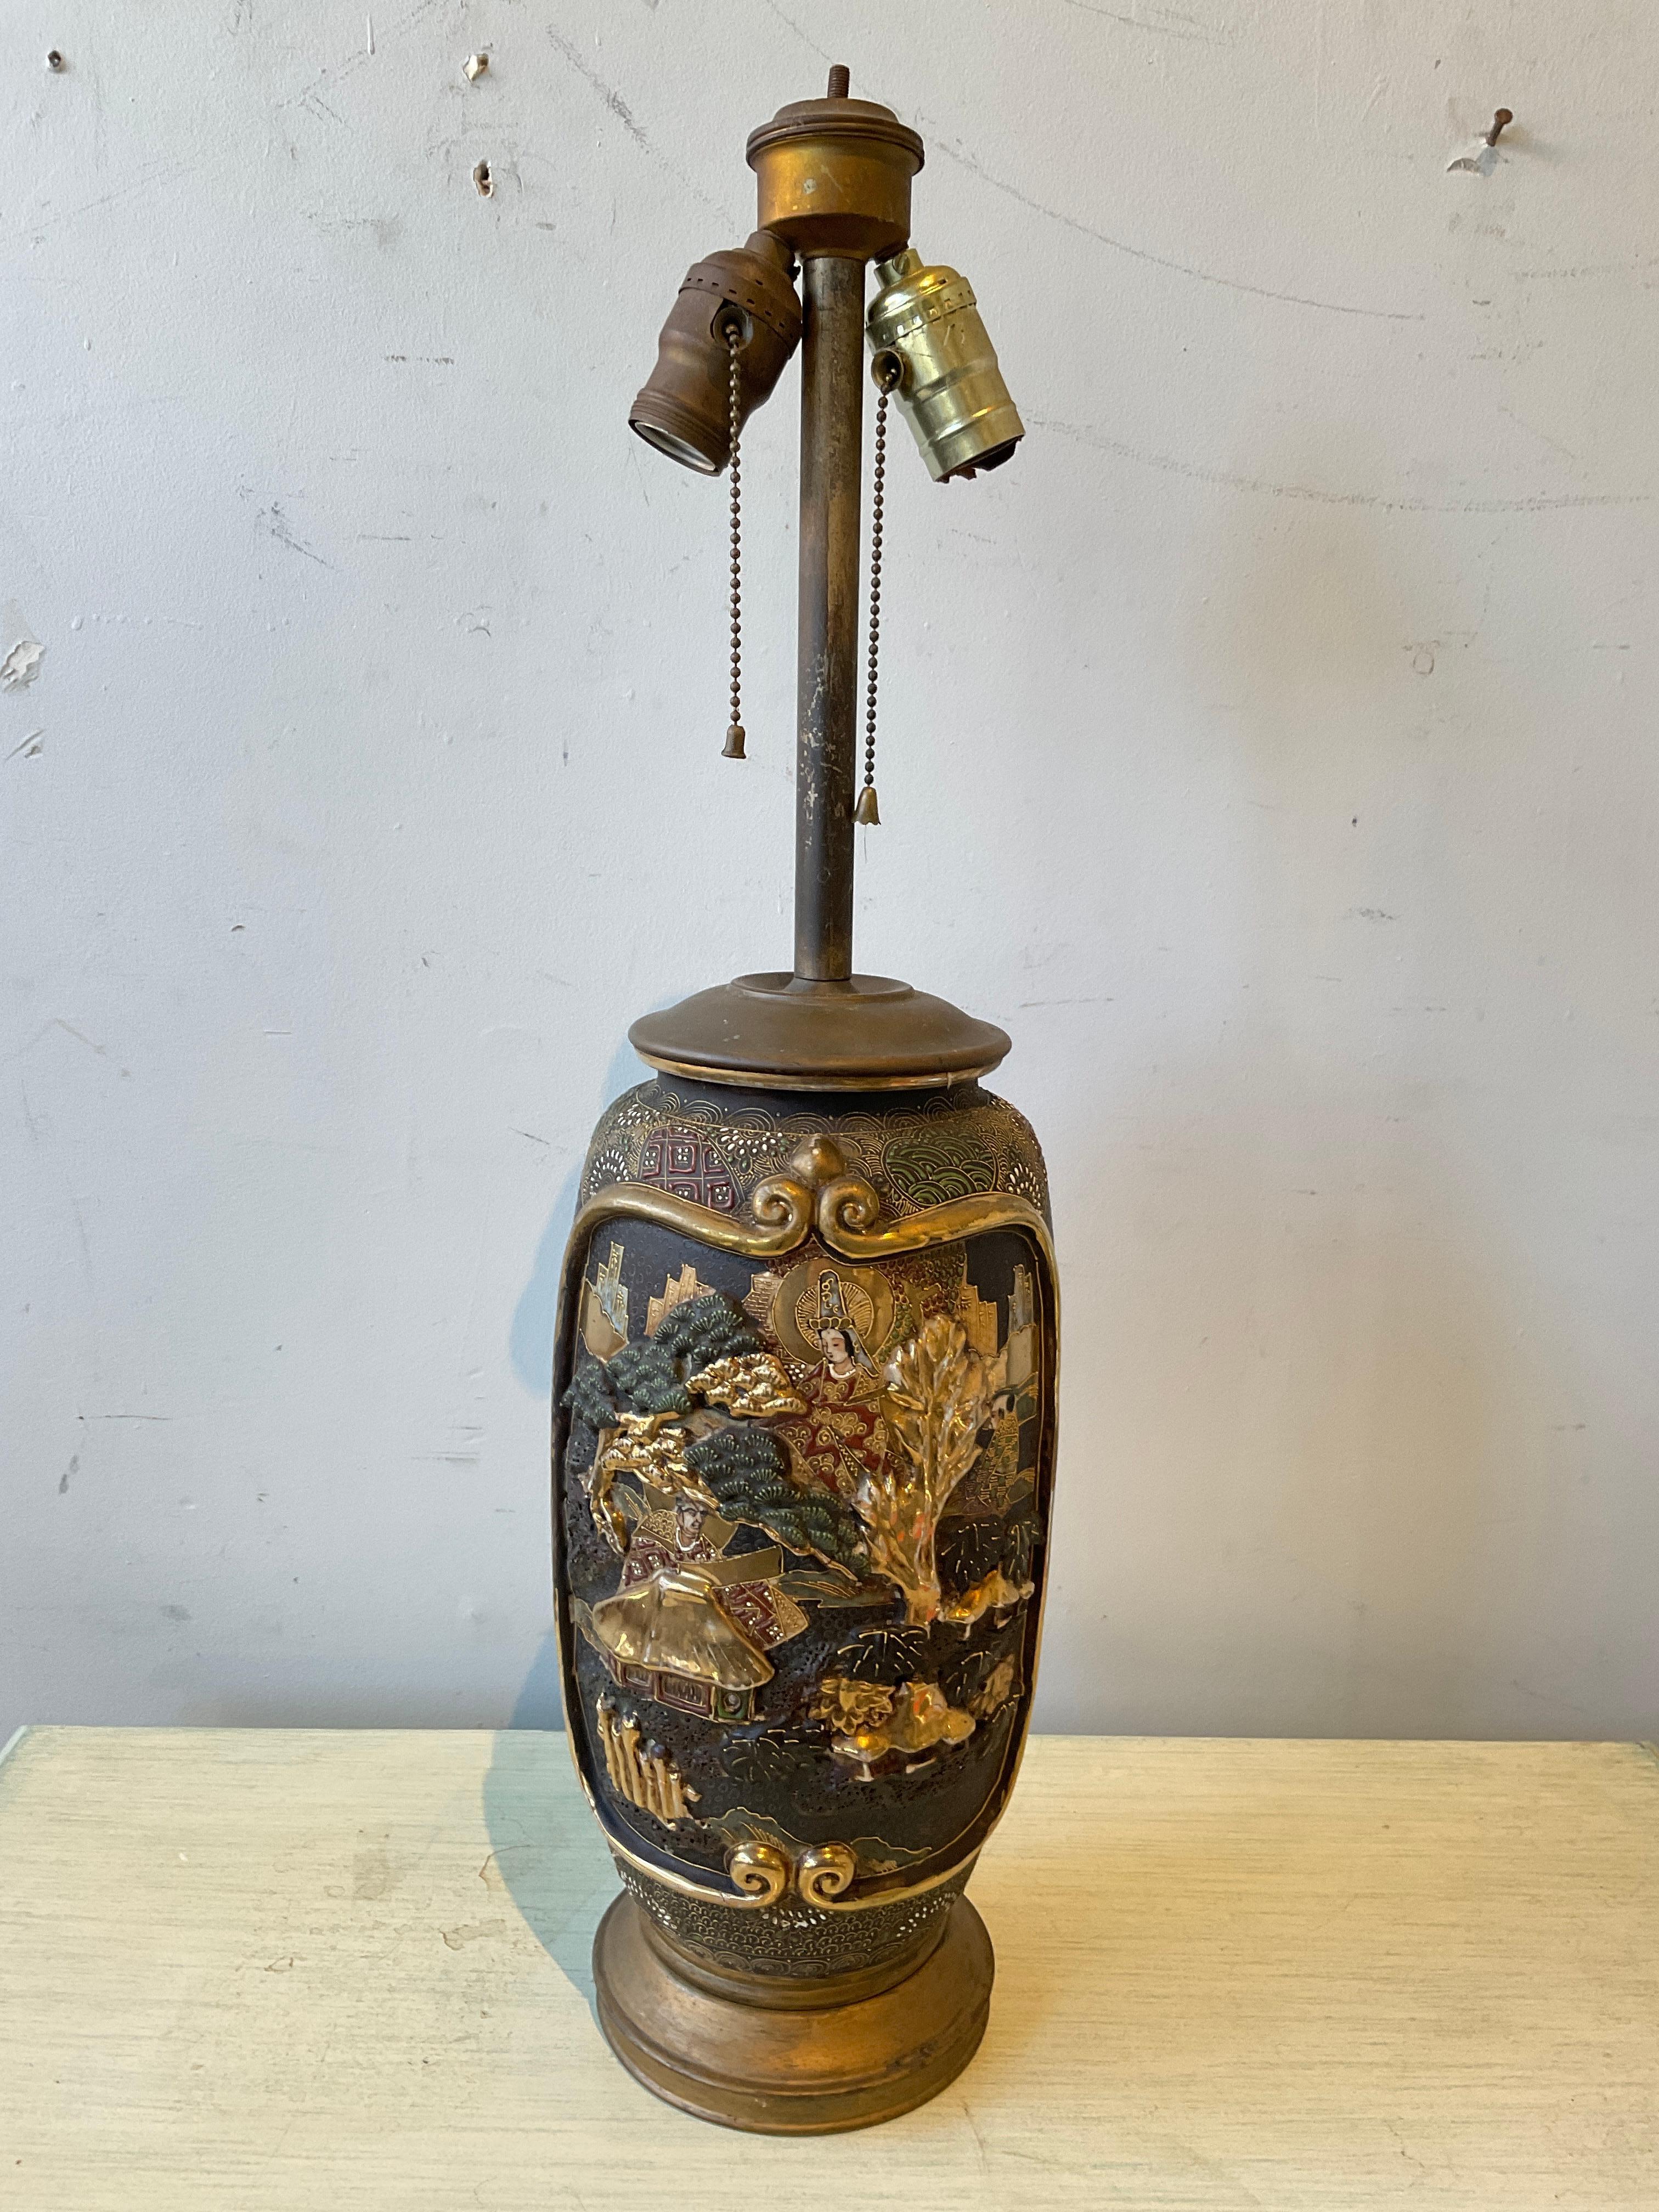 1890s Ceramic Satsuma vase lamp. Height is to top of socket.
Lamp needs rewiring.